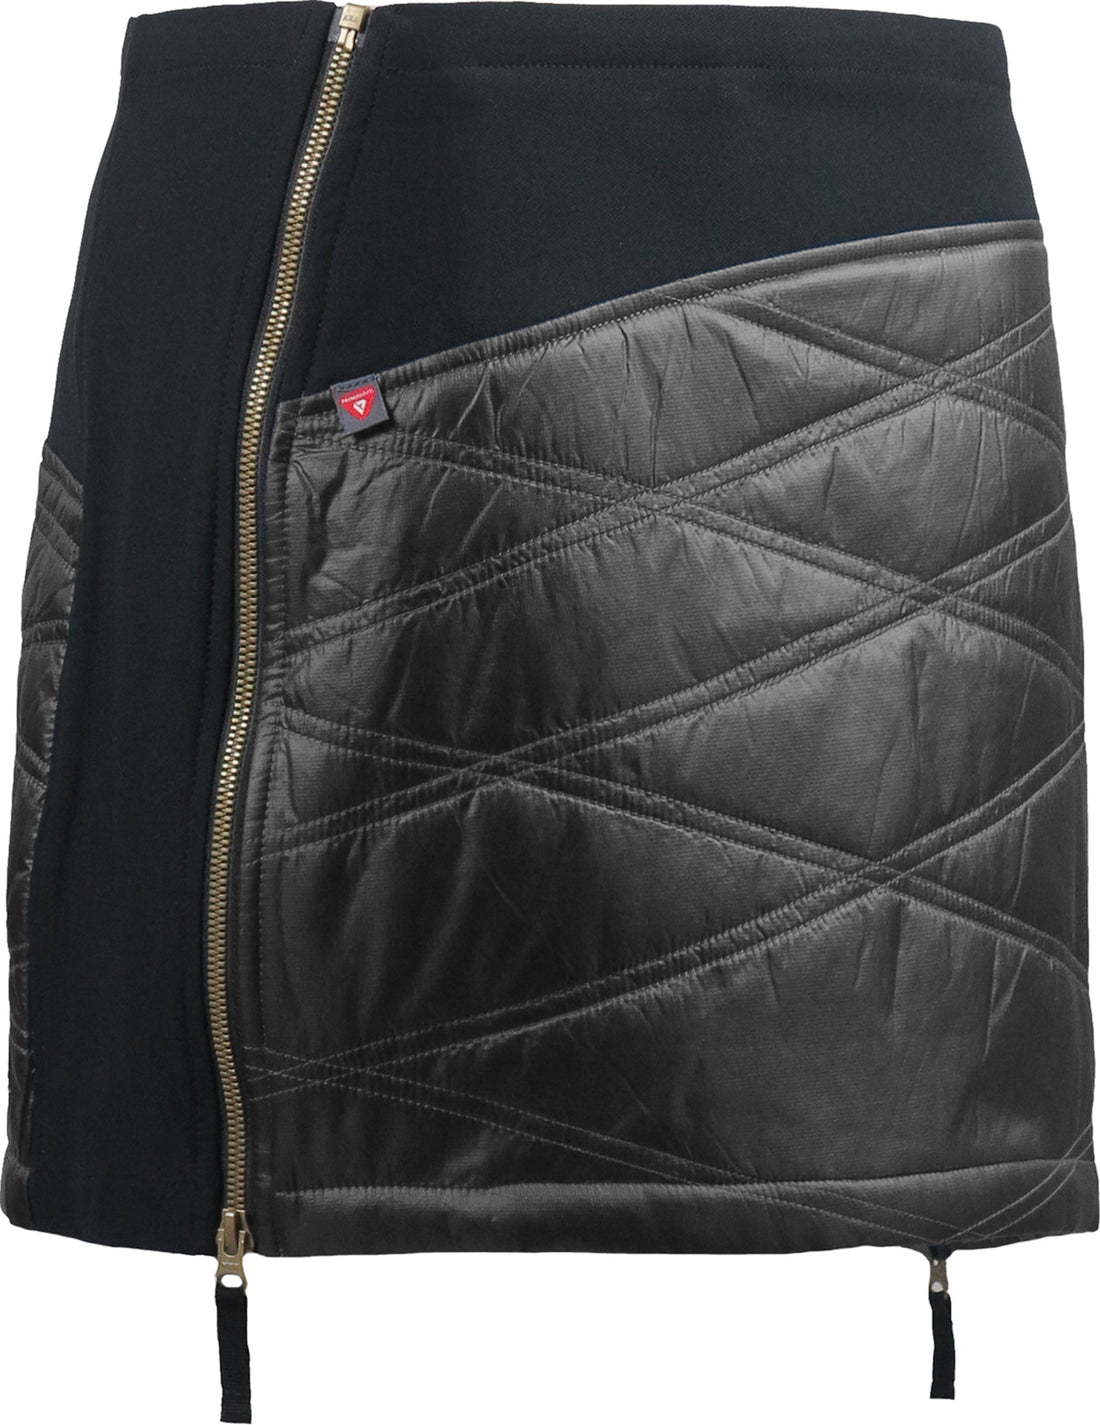 Skhoop Karolin Skirt stretch panel side detail in black